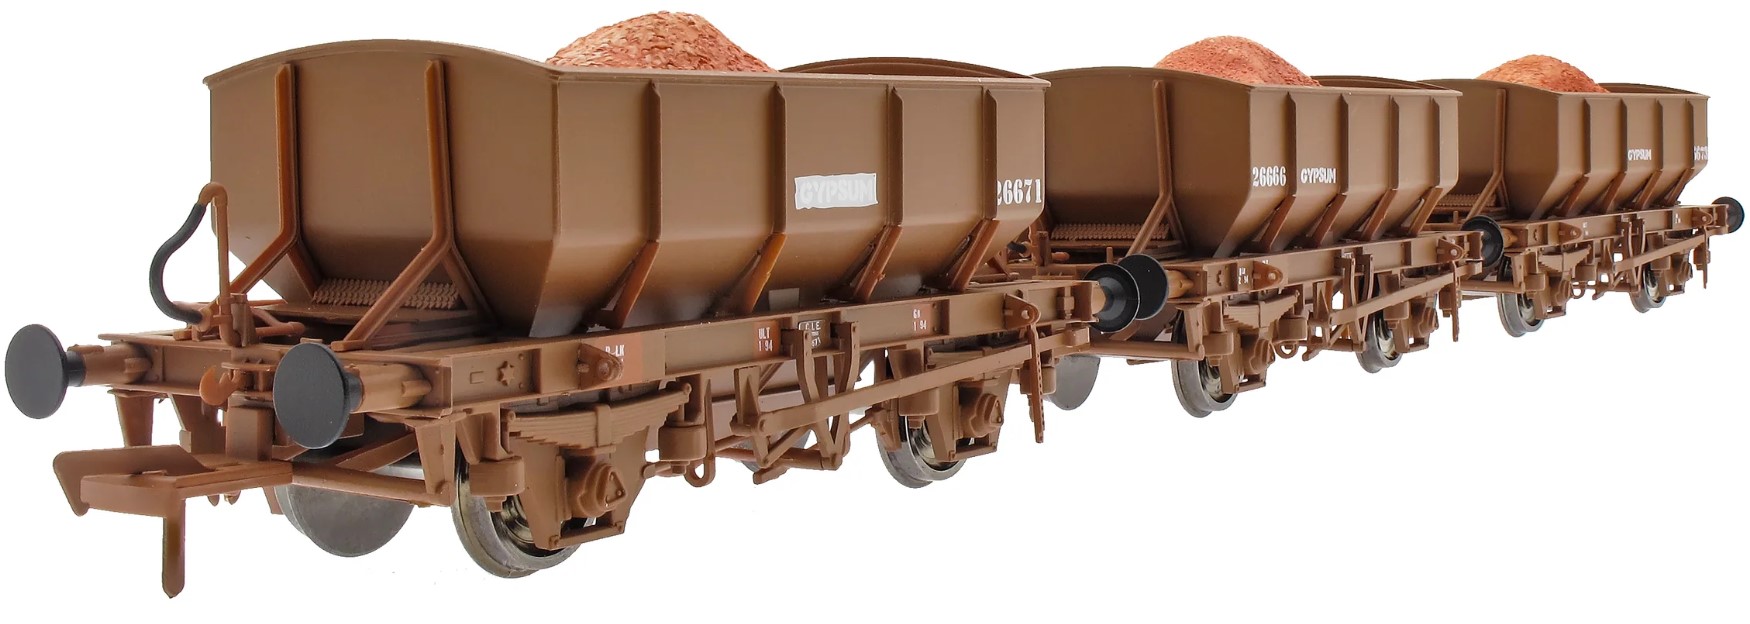 Irish Railway Models OO Gauge (1:76 Scale) 4-wheel Gypsum hopper